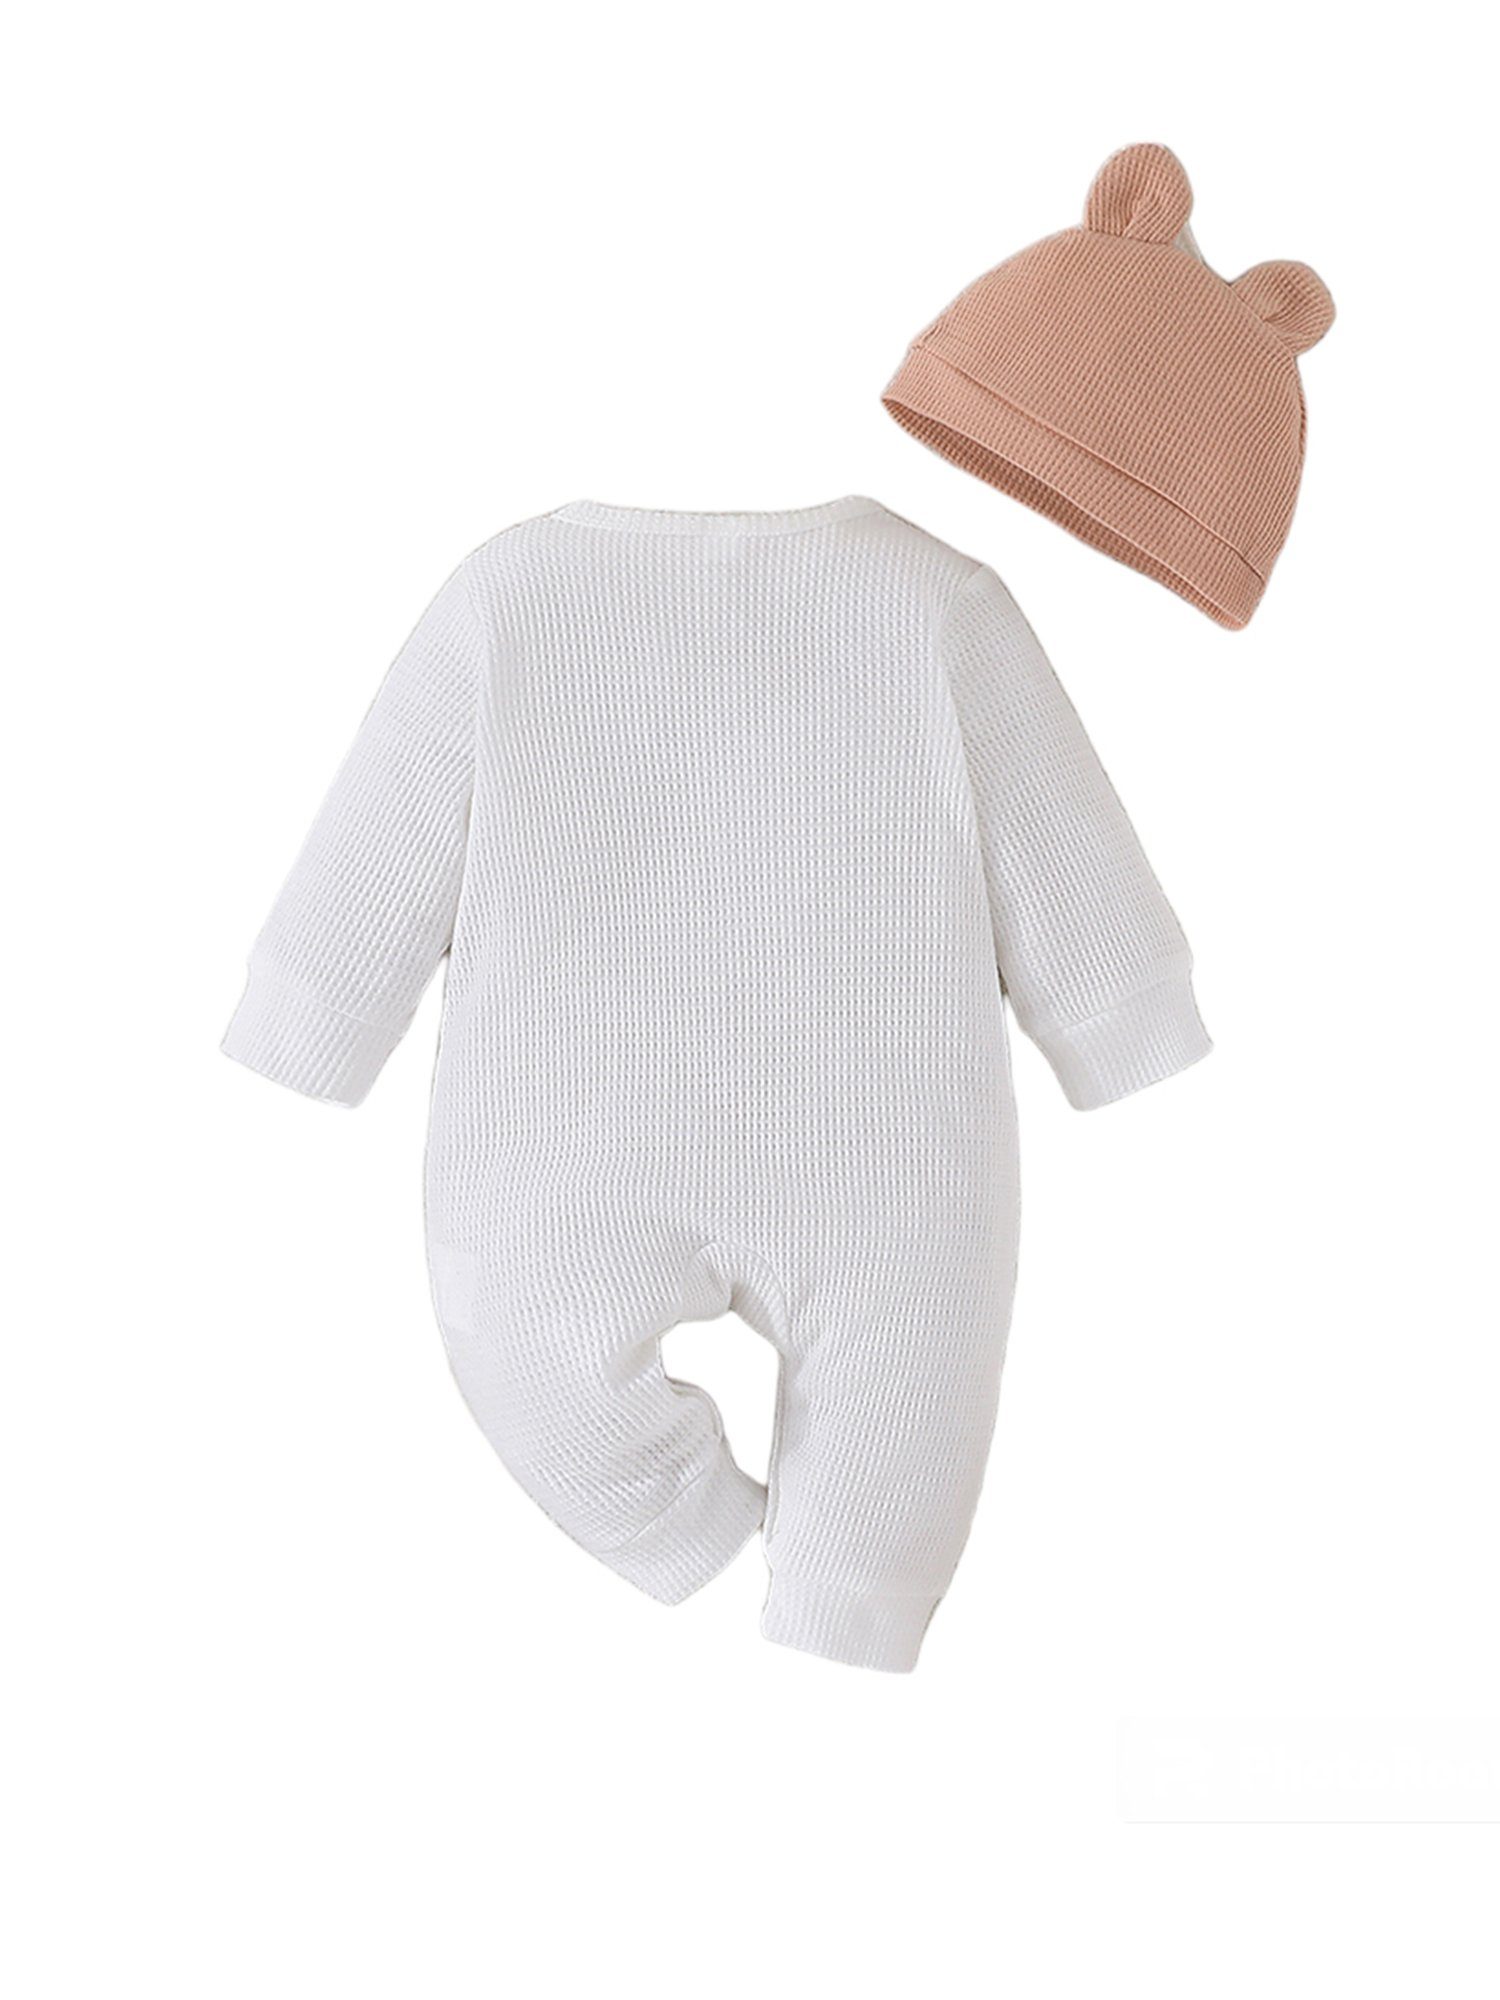 LAPA Strampler Süßes Langarm Strampler Khaki Set Baby mit kontrastfarben aus Waffelstoff